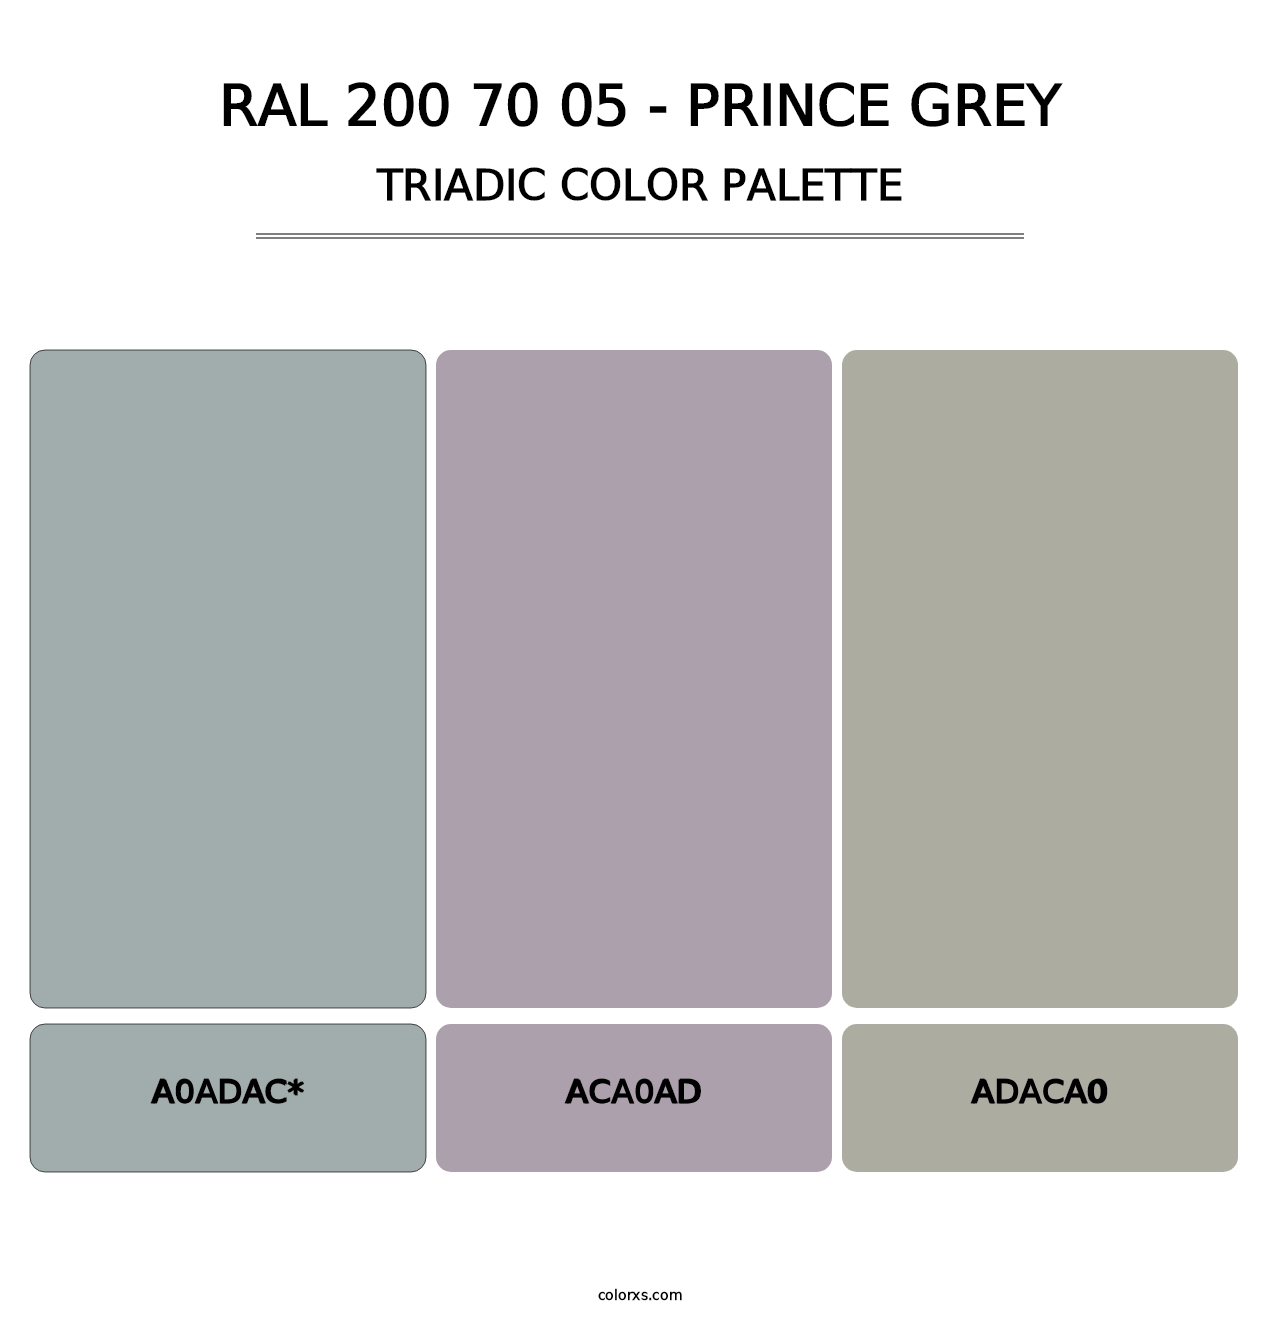 RAL 200 70 05 - Prince Grey - Triadic Color Palette